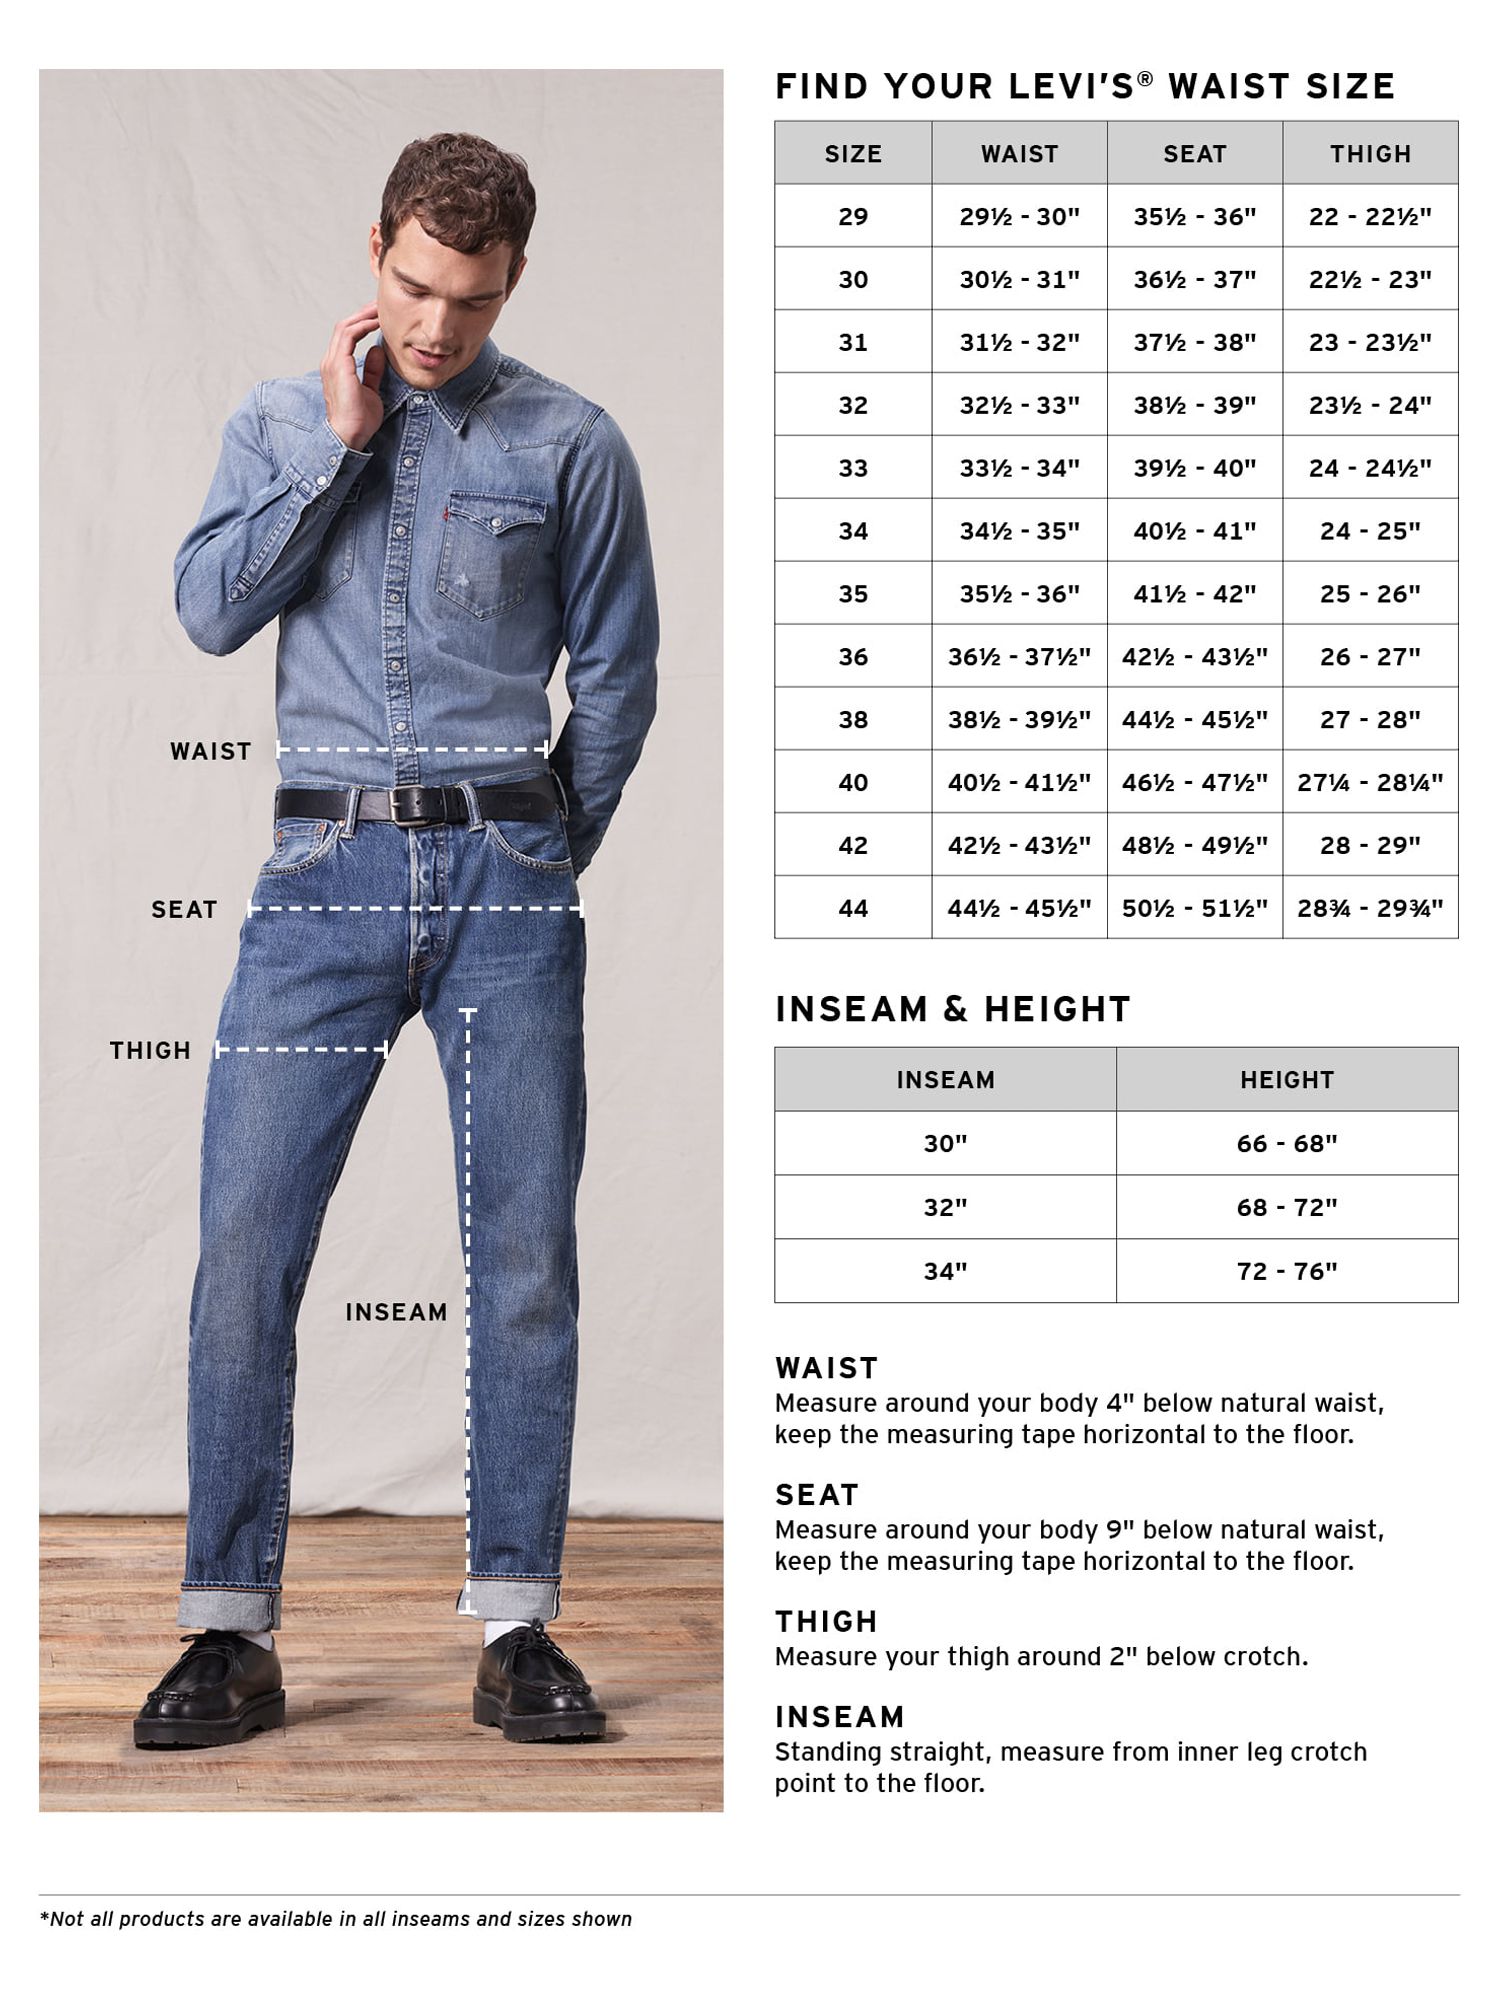 Levi's Men's 511 Slim Fit Jeans - image 4 of 7